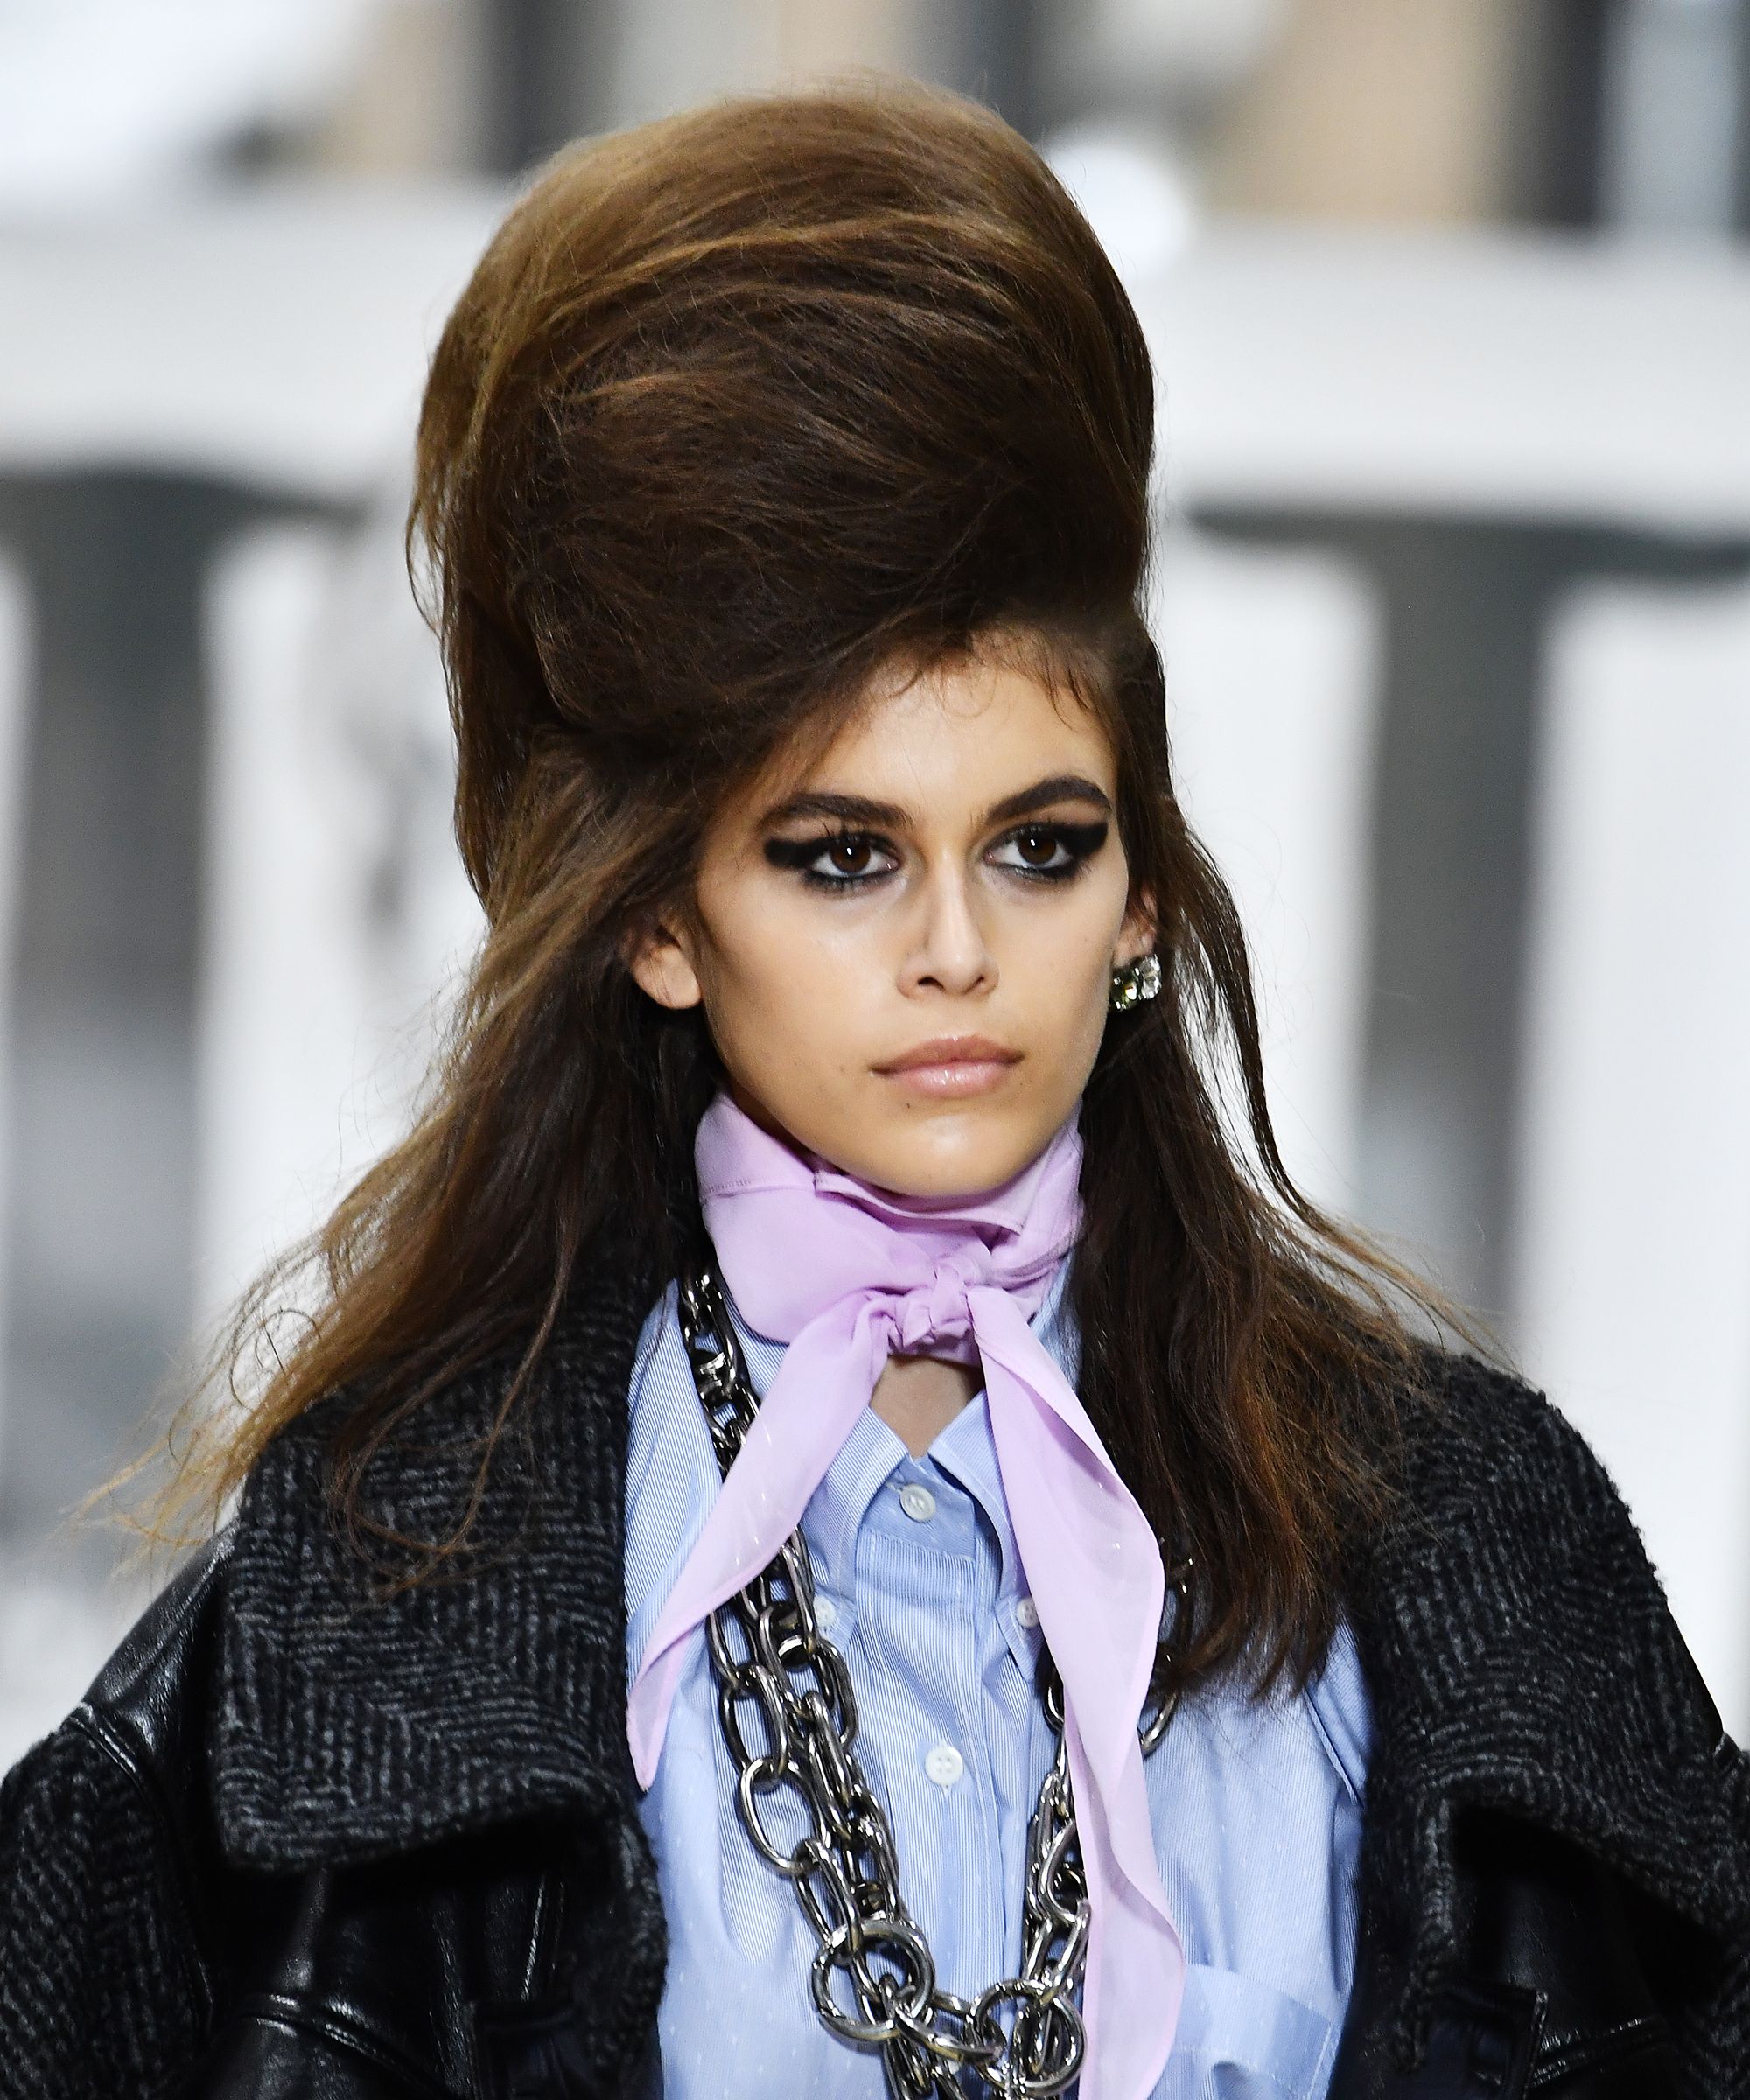 meet fashion month’s most futuristic trend: barbarella hair